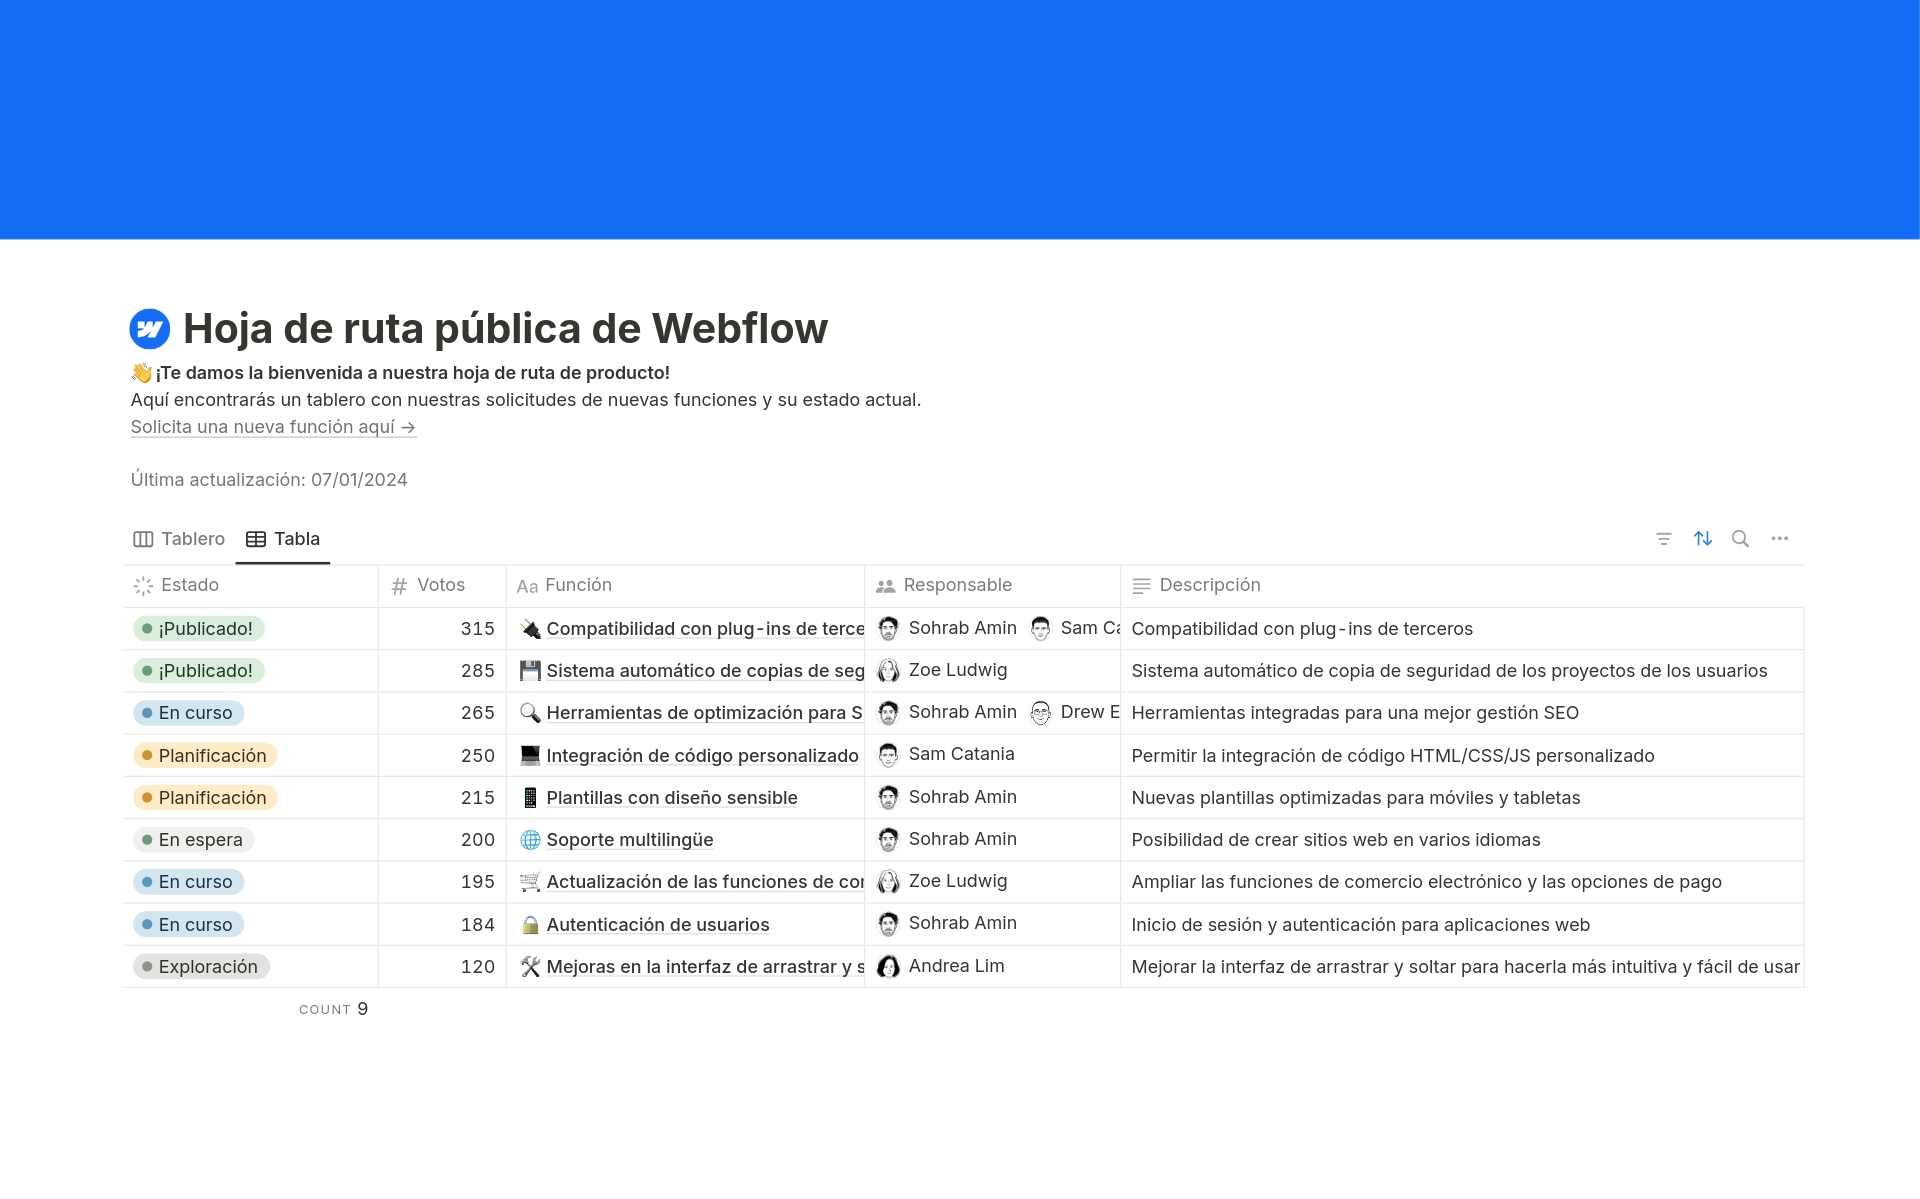 Vista previa de una plantilla para Hoja de ruta pública de Webflow